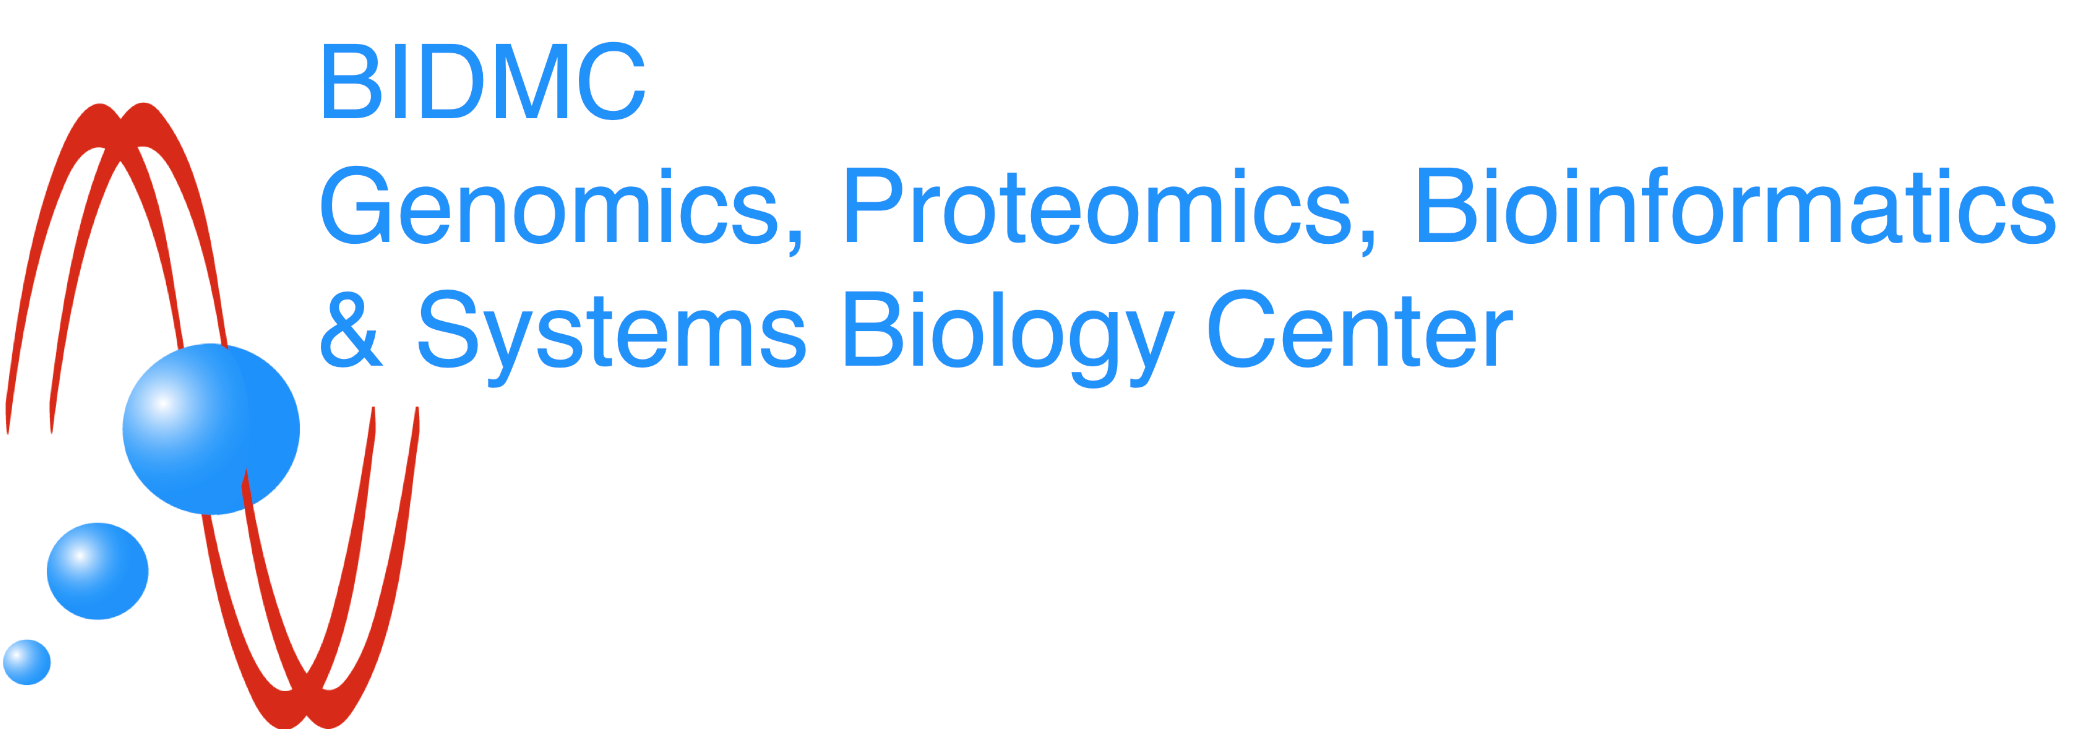 Genomics and Proteomics Core - BIDMC